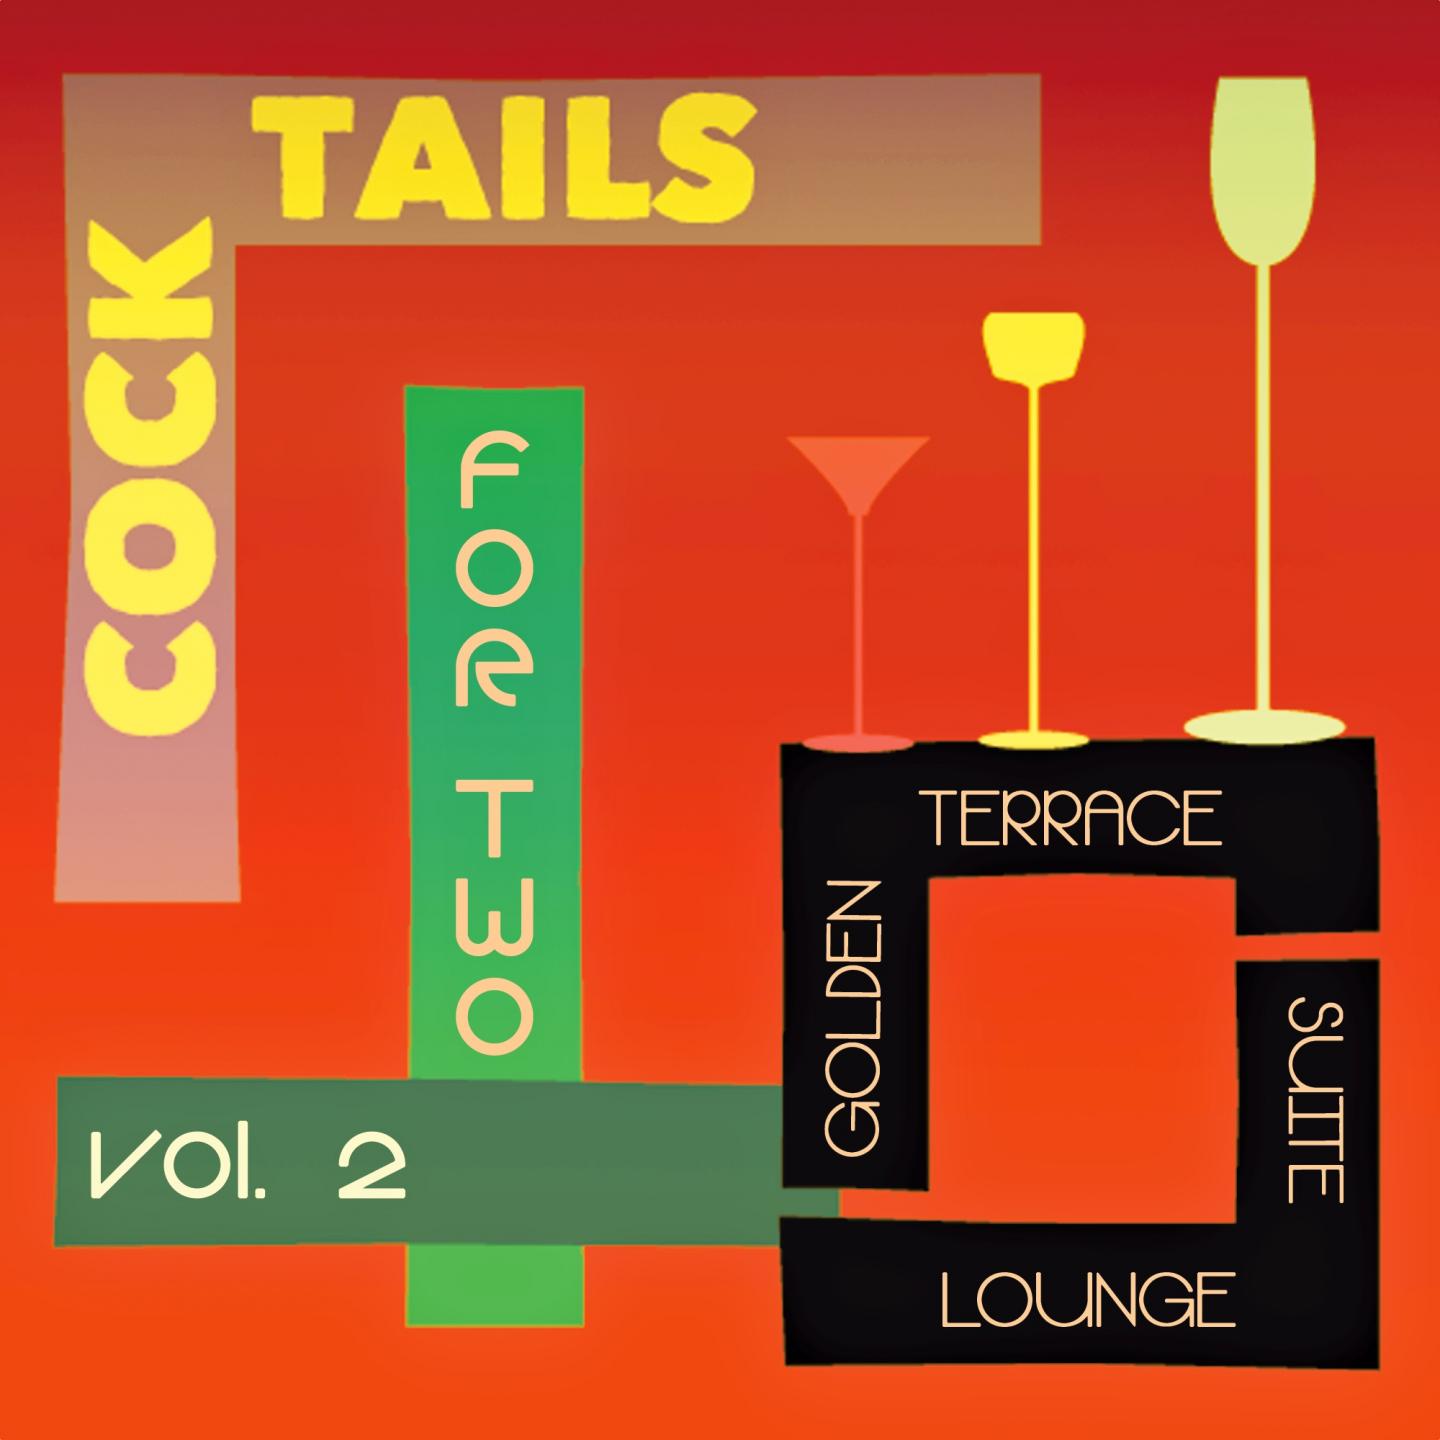 Cocktails for Two, Vol. 2 (Golden Terrace Suite Lounge)